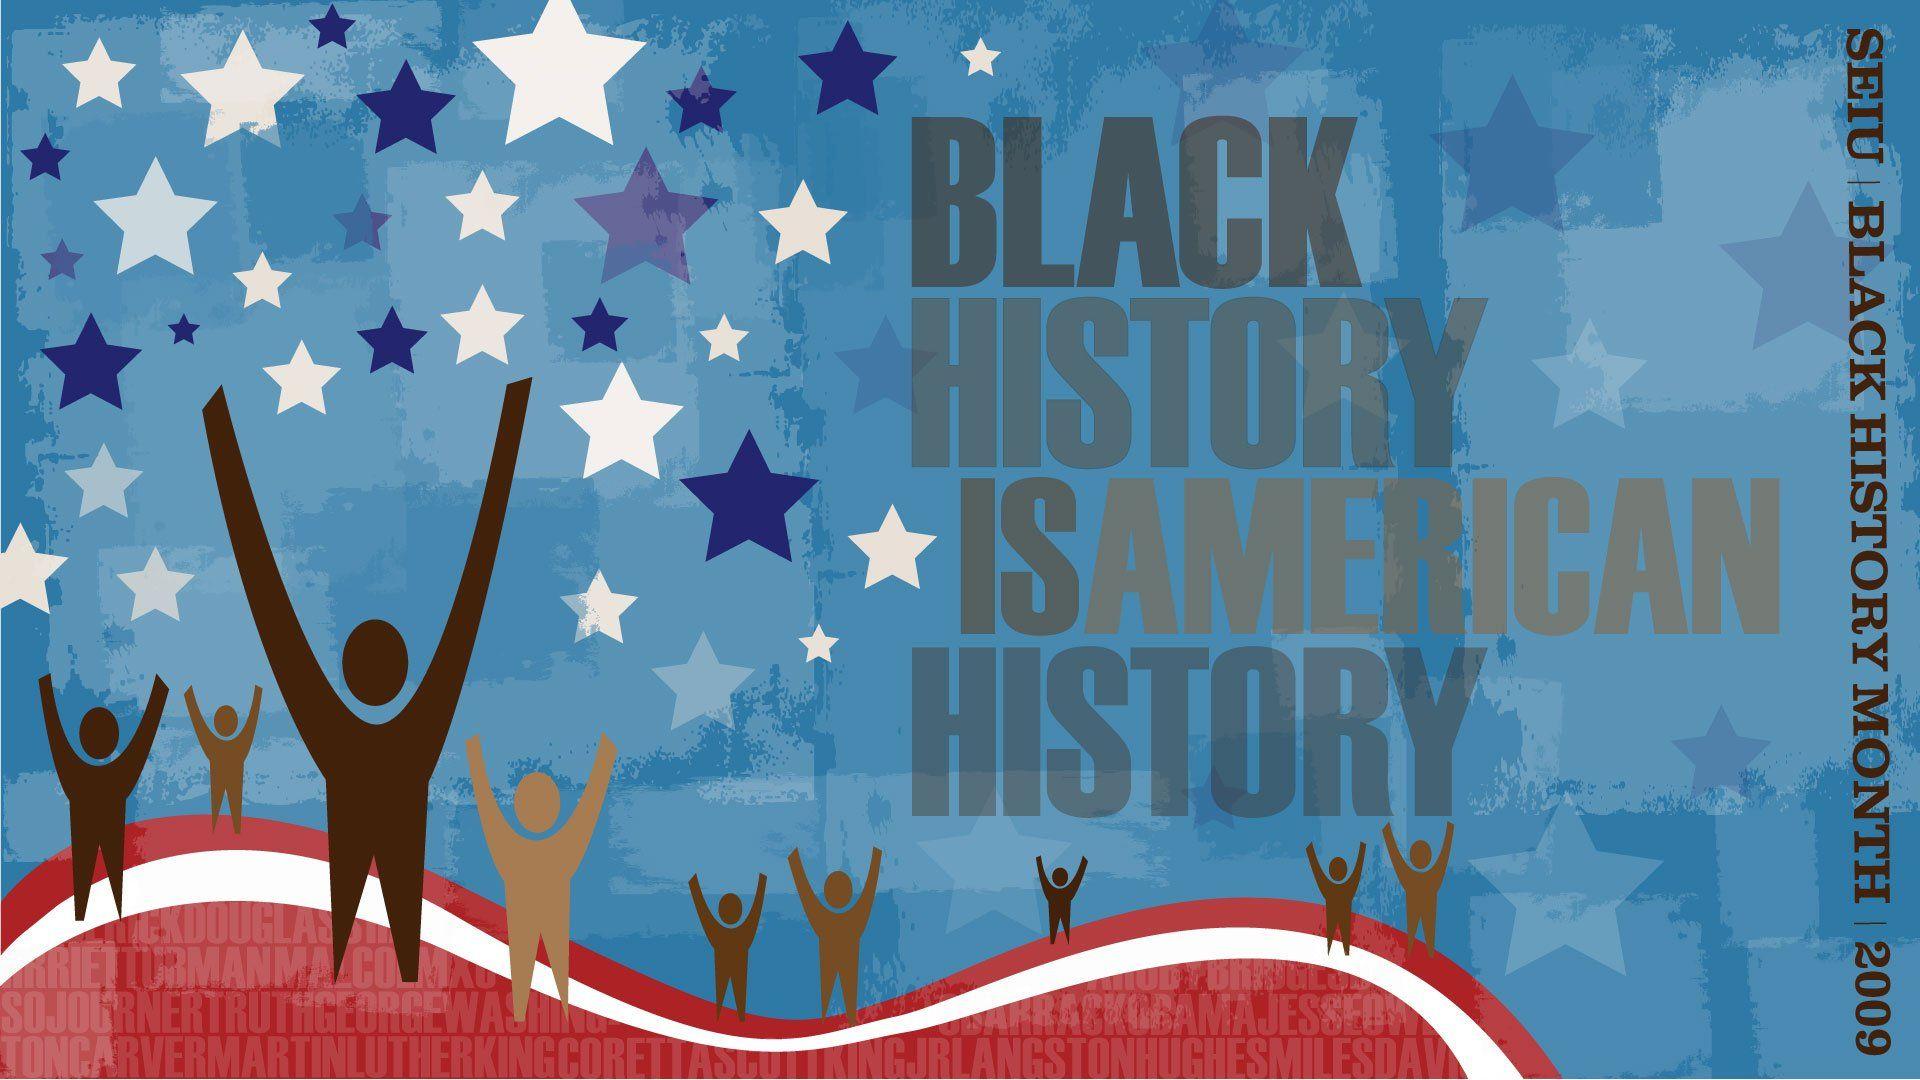 GMA Inspiration List celebrates those making Black history now  Good  Morning America